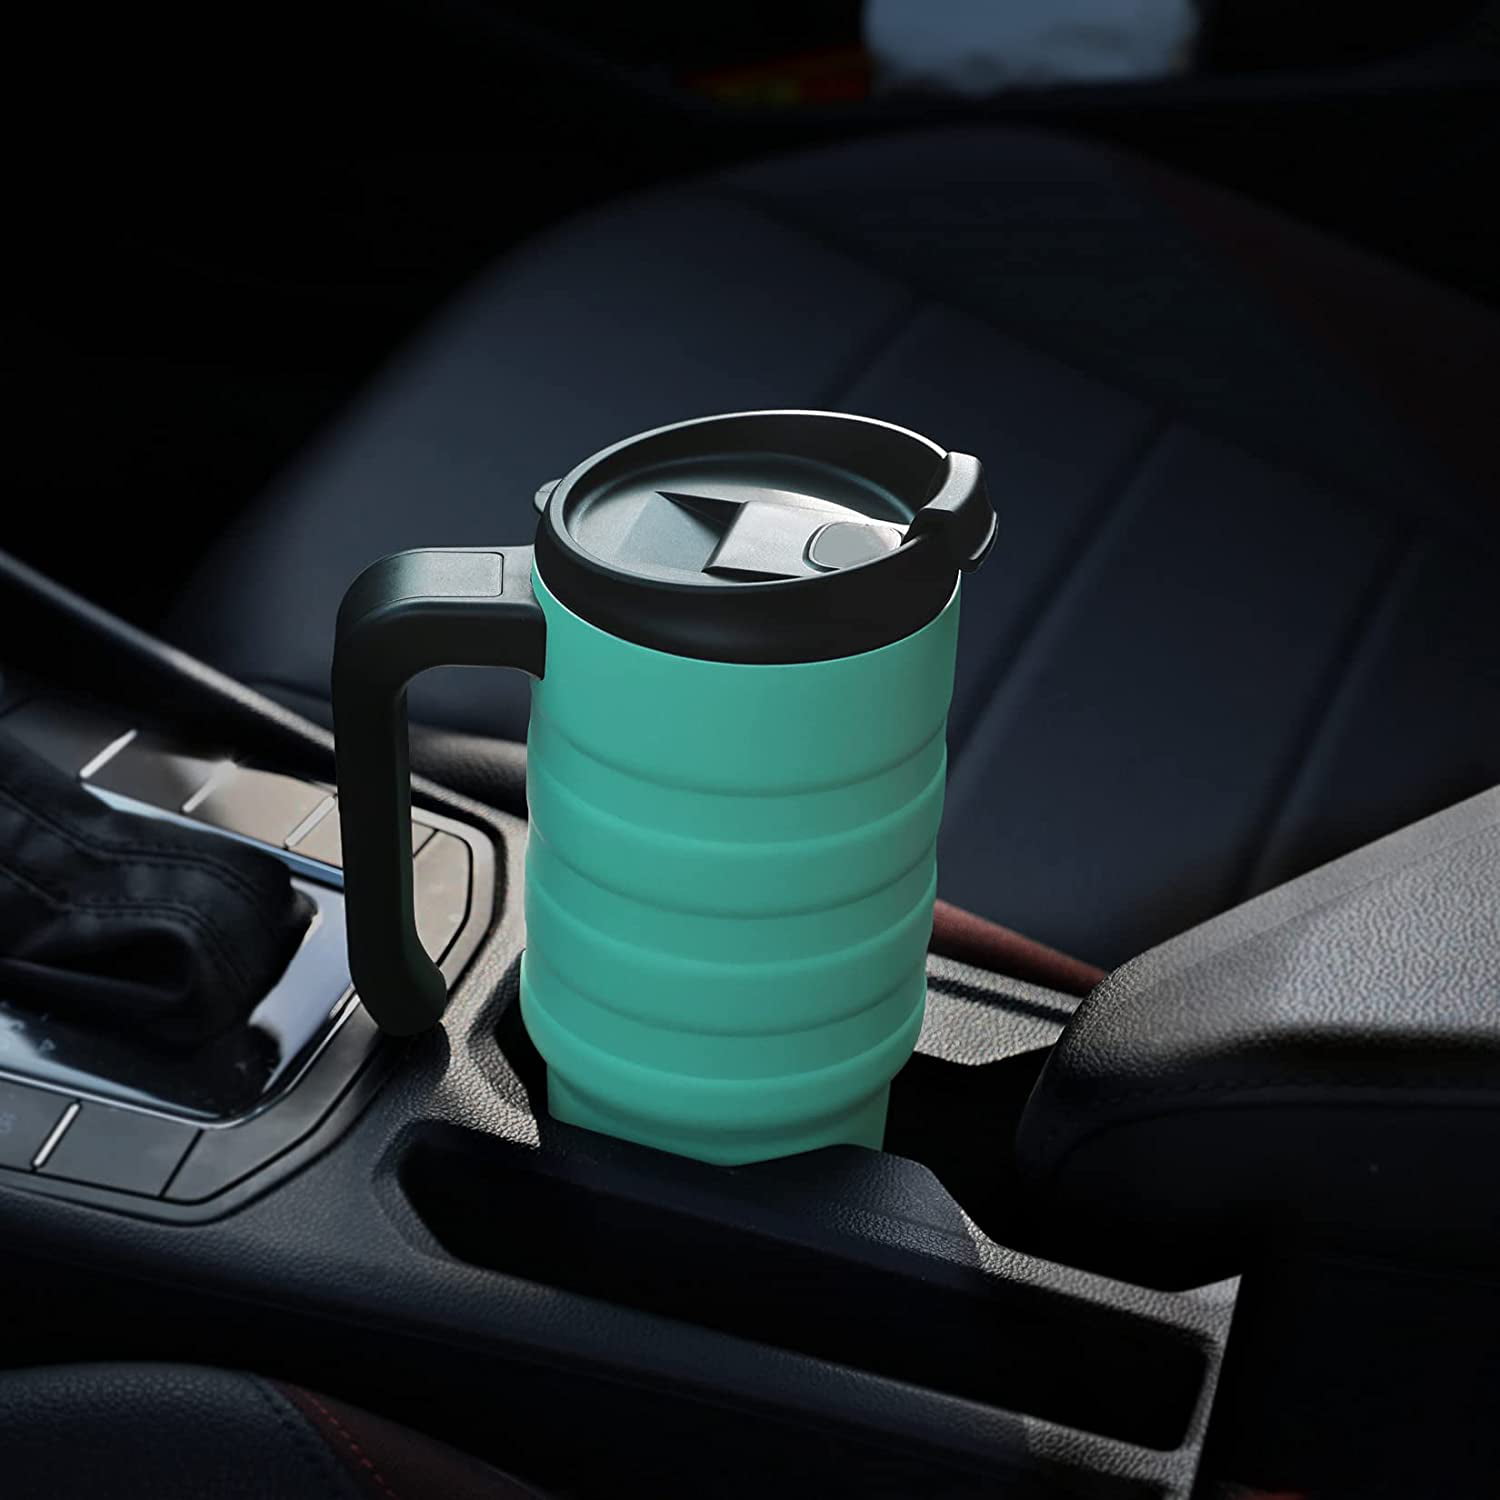 HAUSHOF 24 oz Travel Mug with Handle, Stainless Steel Vacuum Insulated  Coffee Travel Mug, Double Wal…See more HAUSHOF 24 oz Travel Mug with  Handle